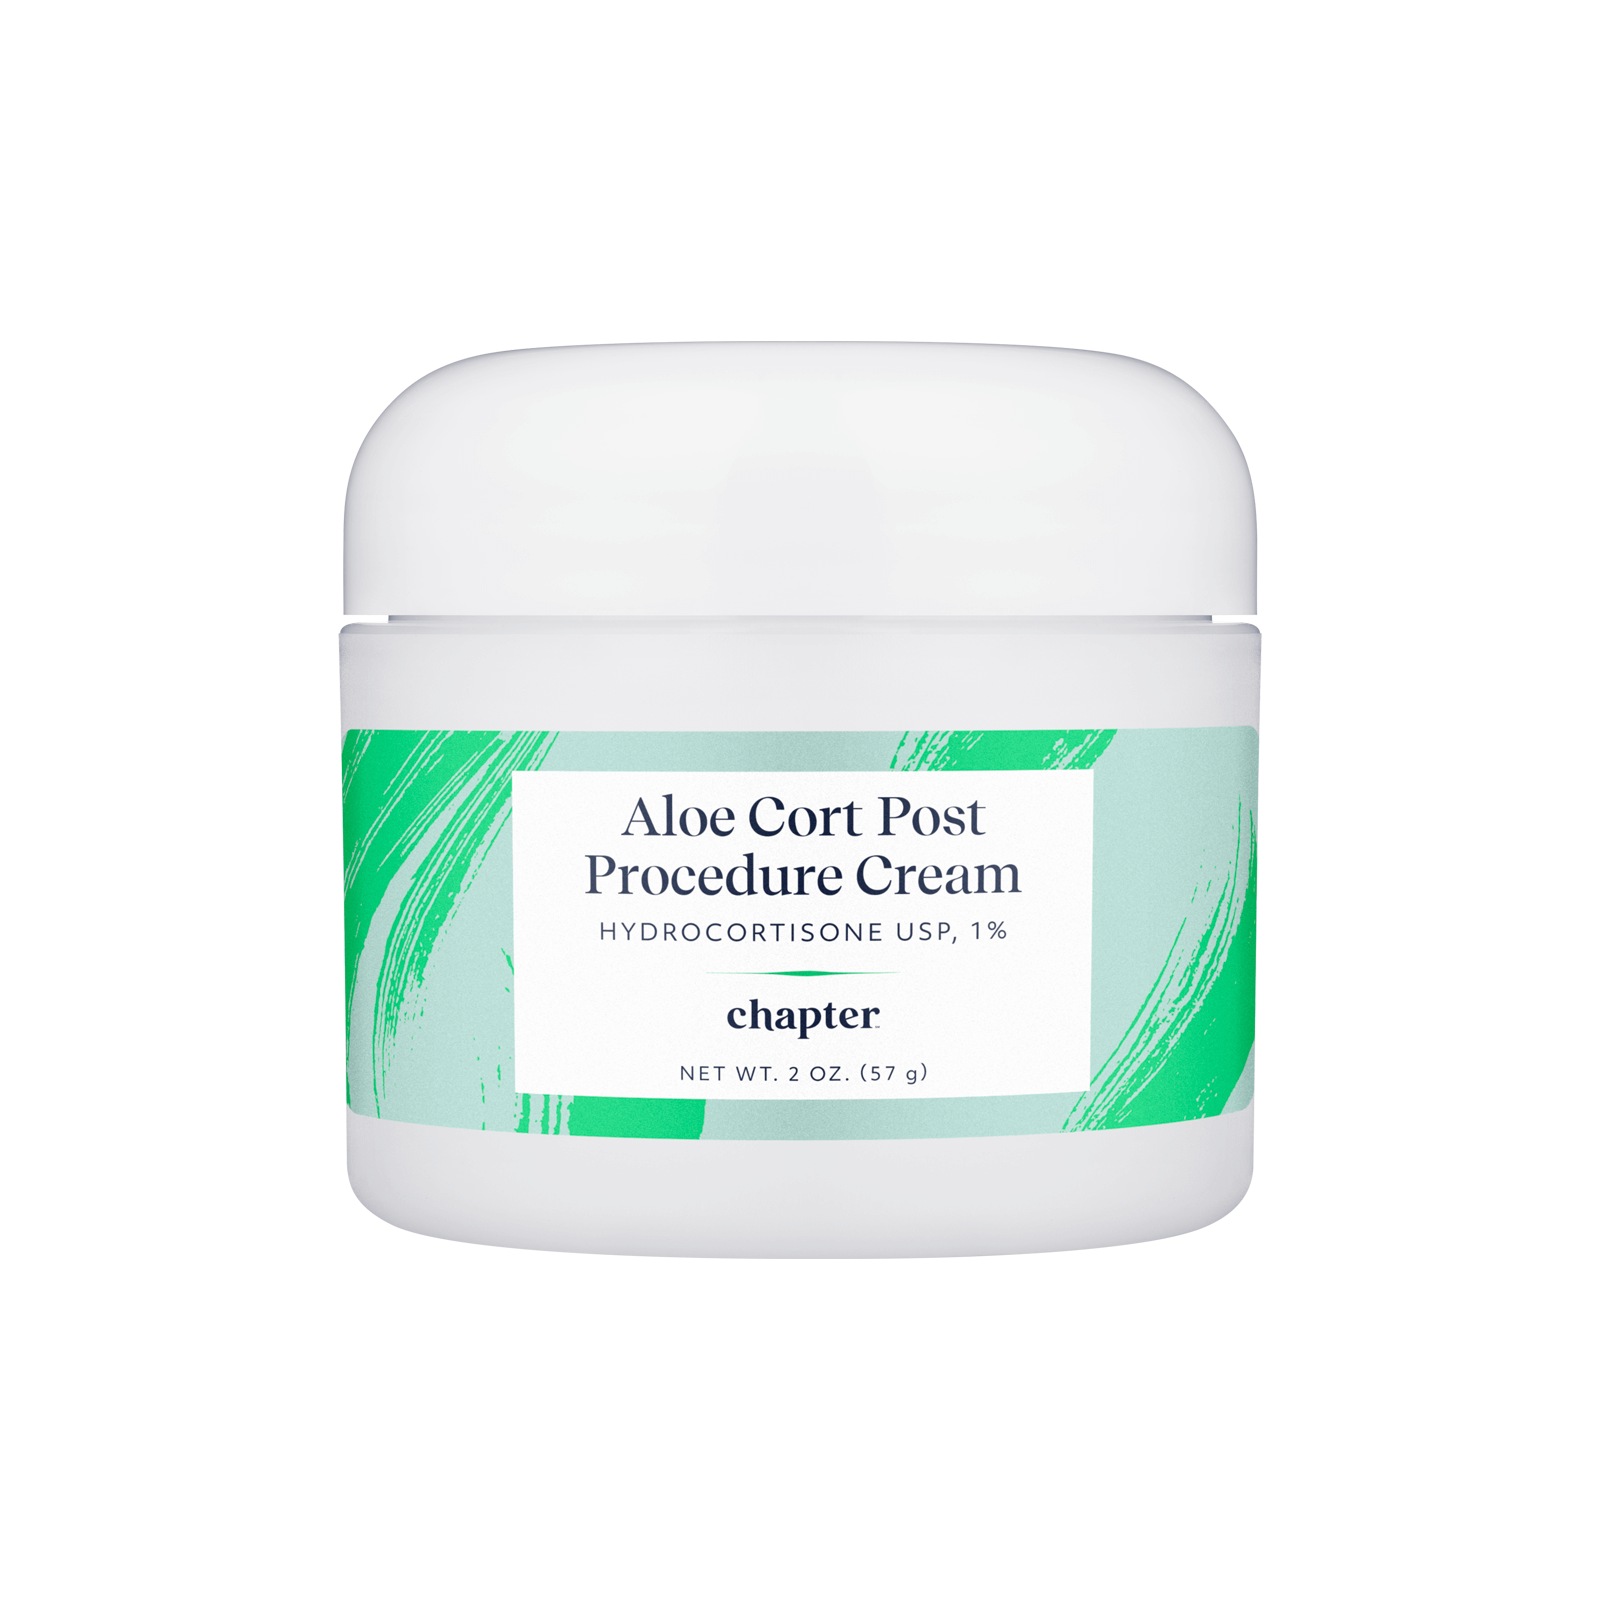 Aloe Cort Post Procedure Cream